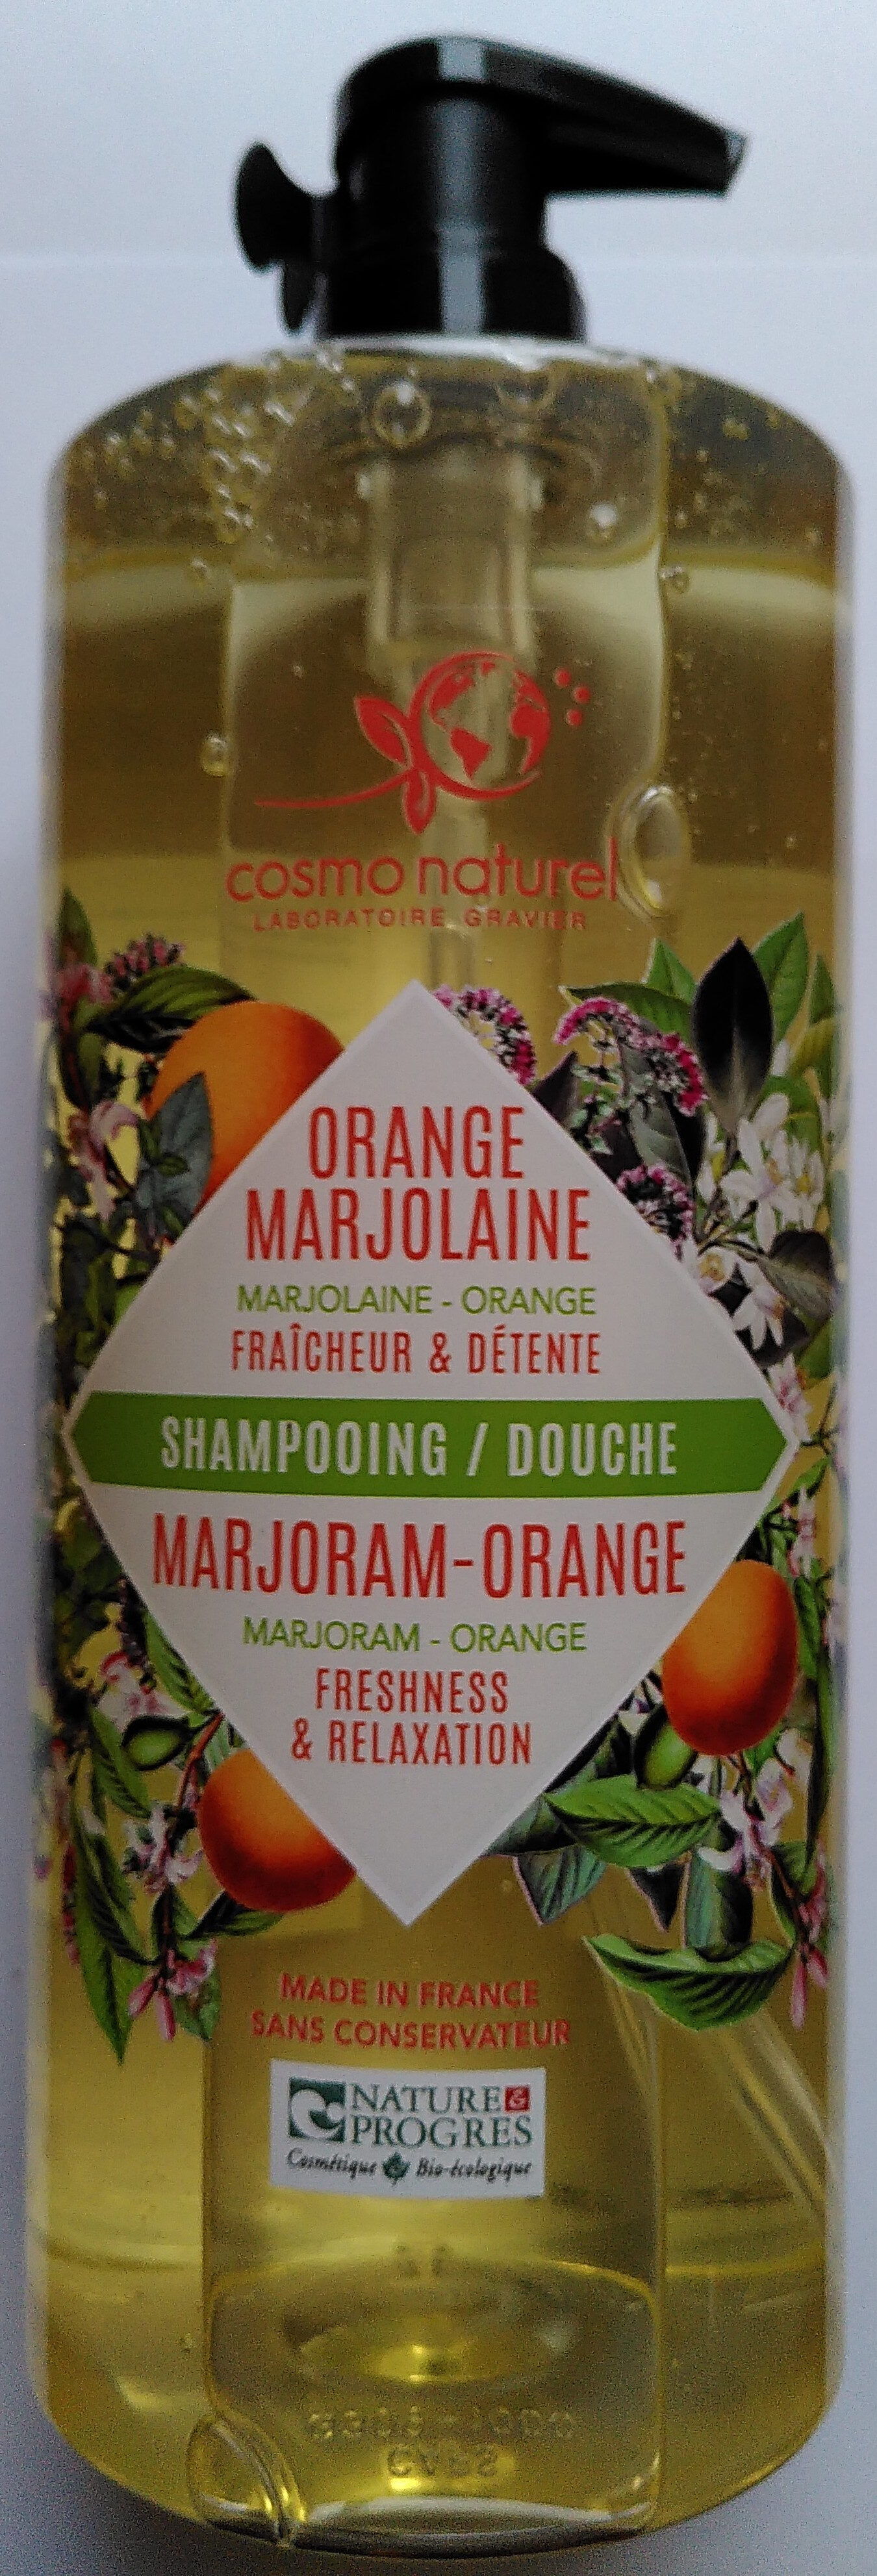 Shampoing/douche orange marjolaine - 製品 - fr